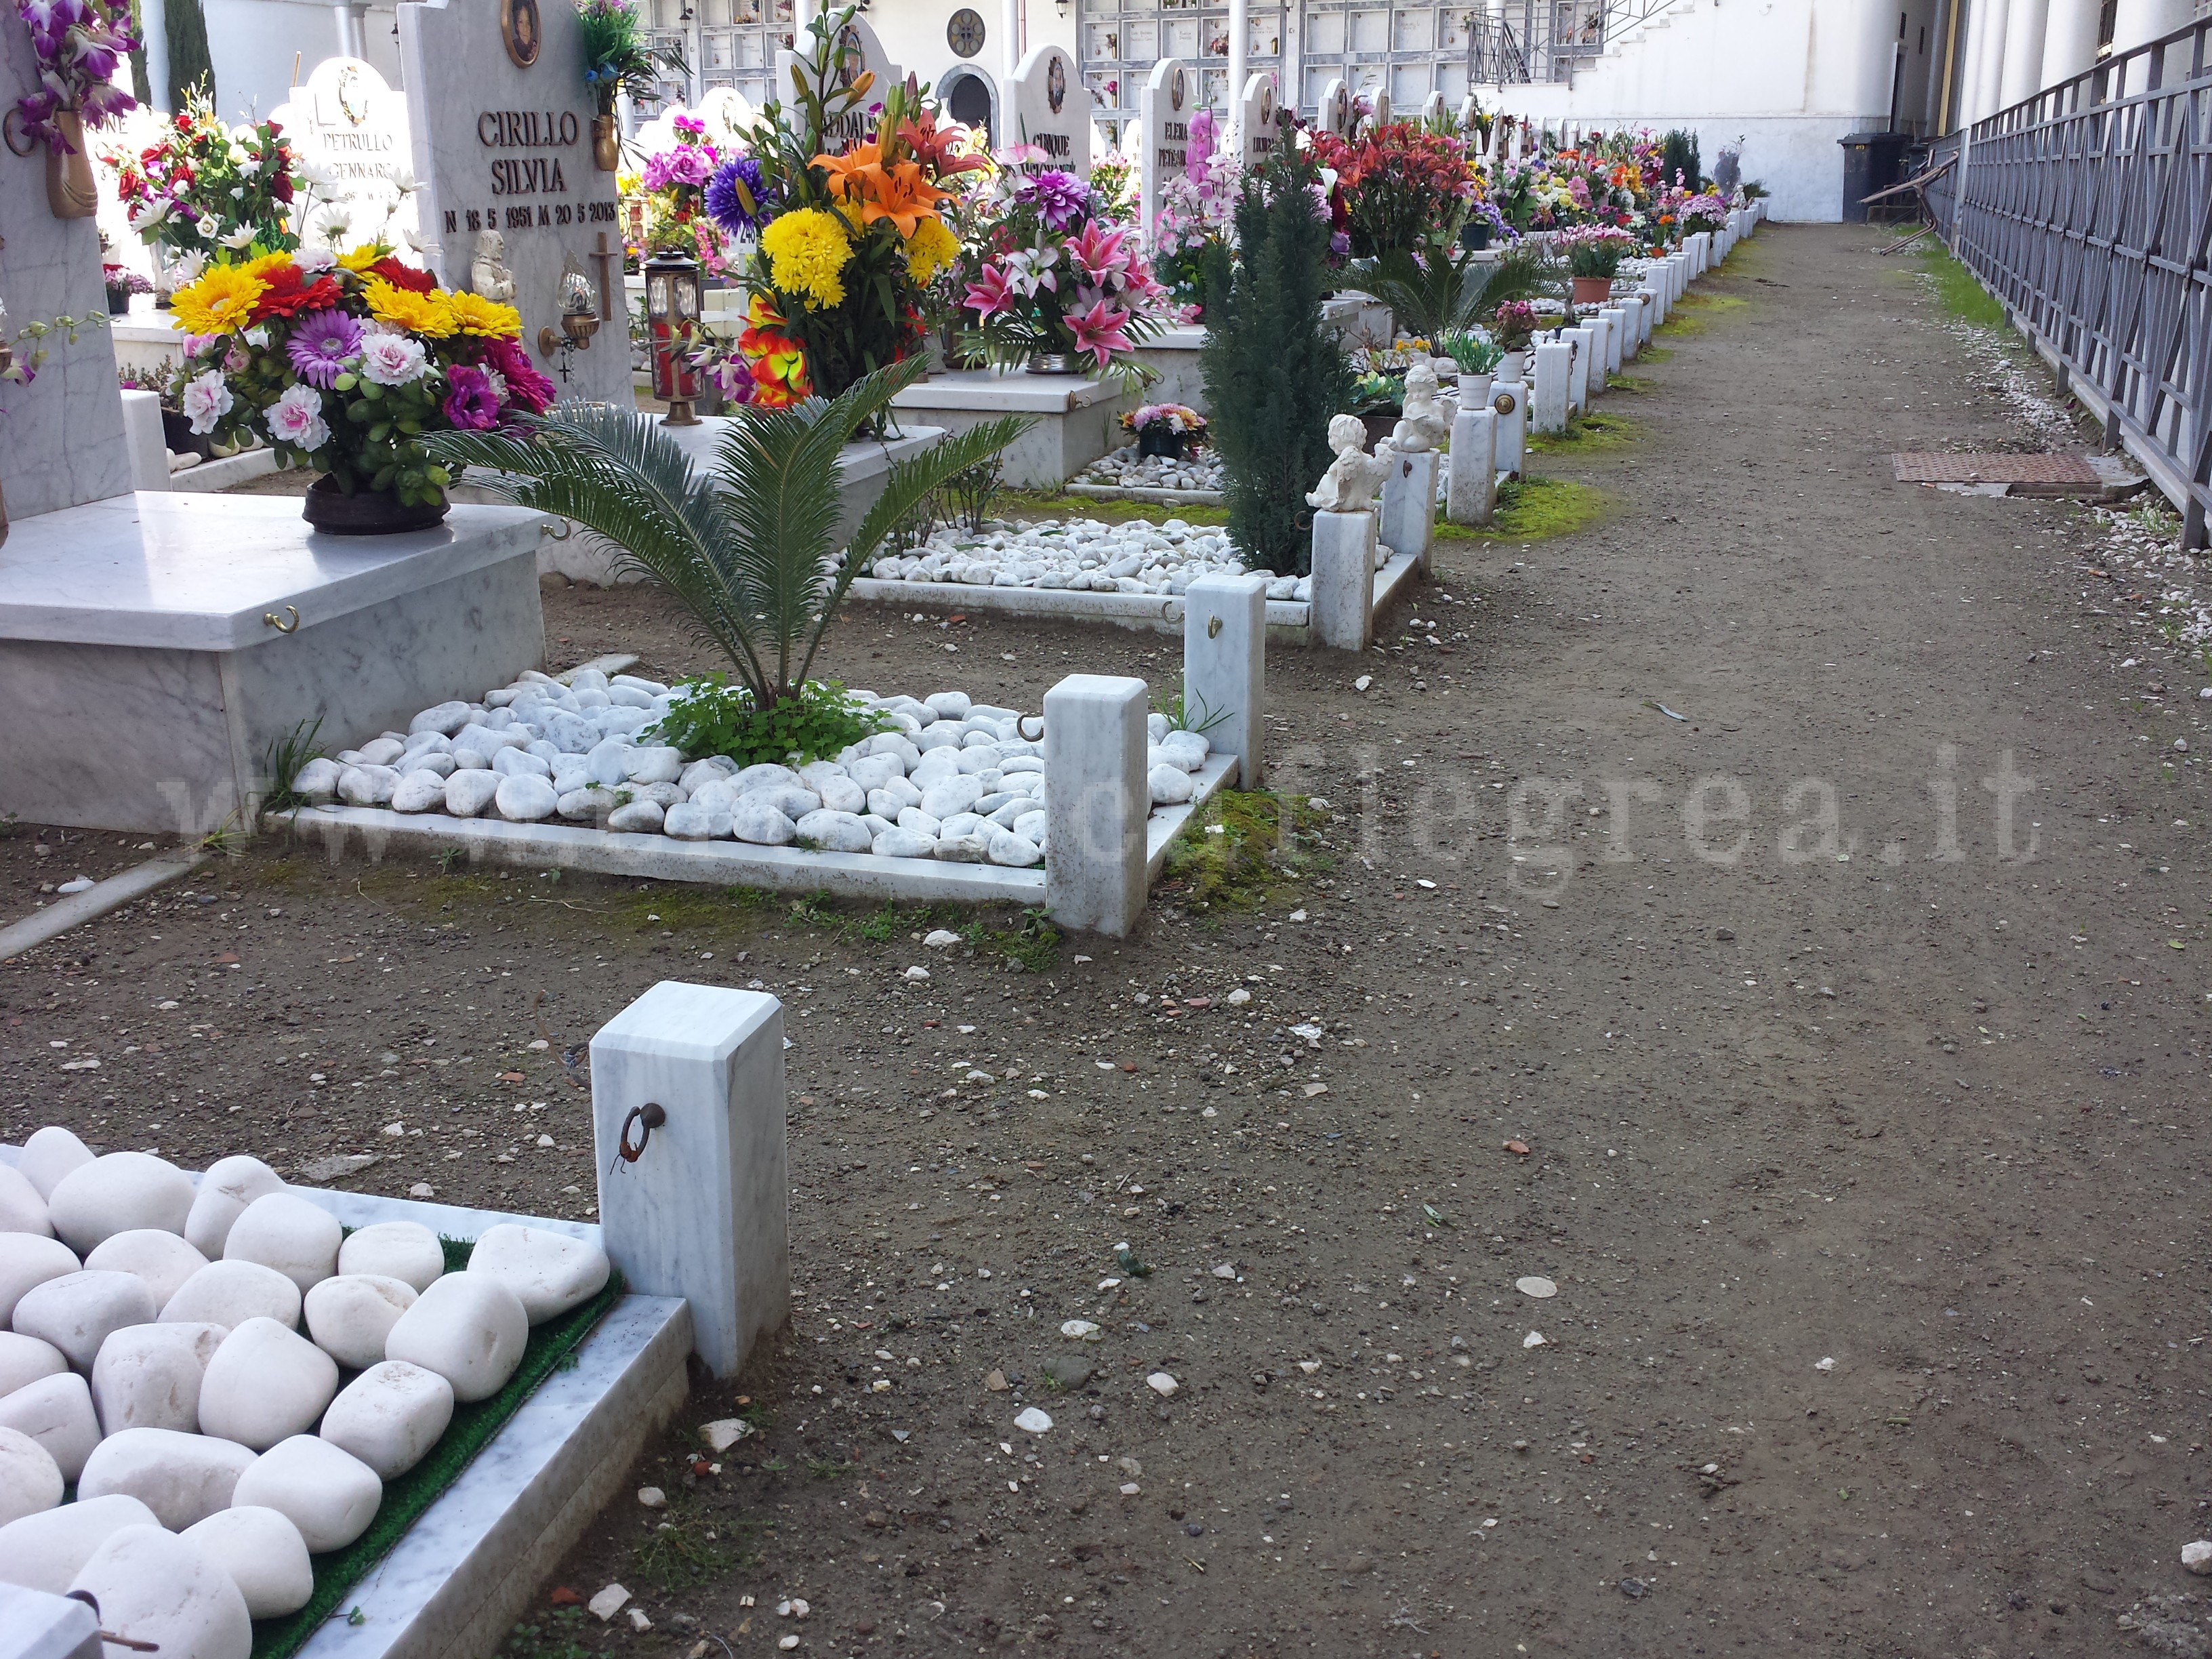 POZZUOLI/ Ennesimo furto al cimitero, ladri rubano decine di metri di rame